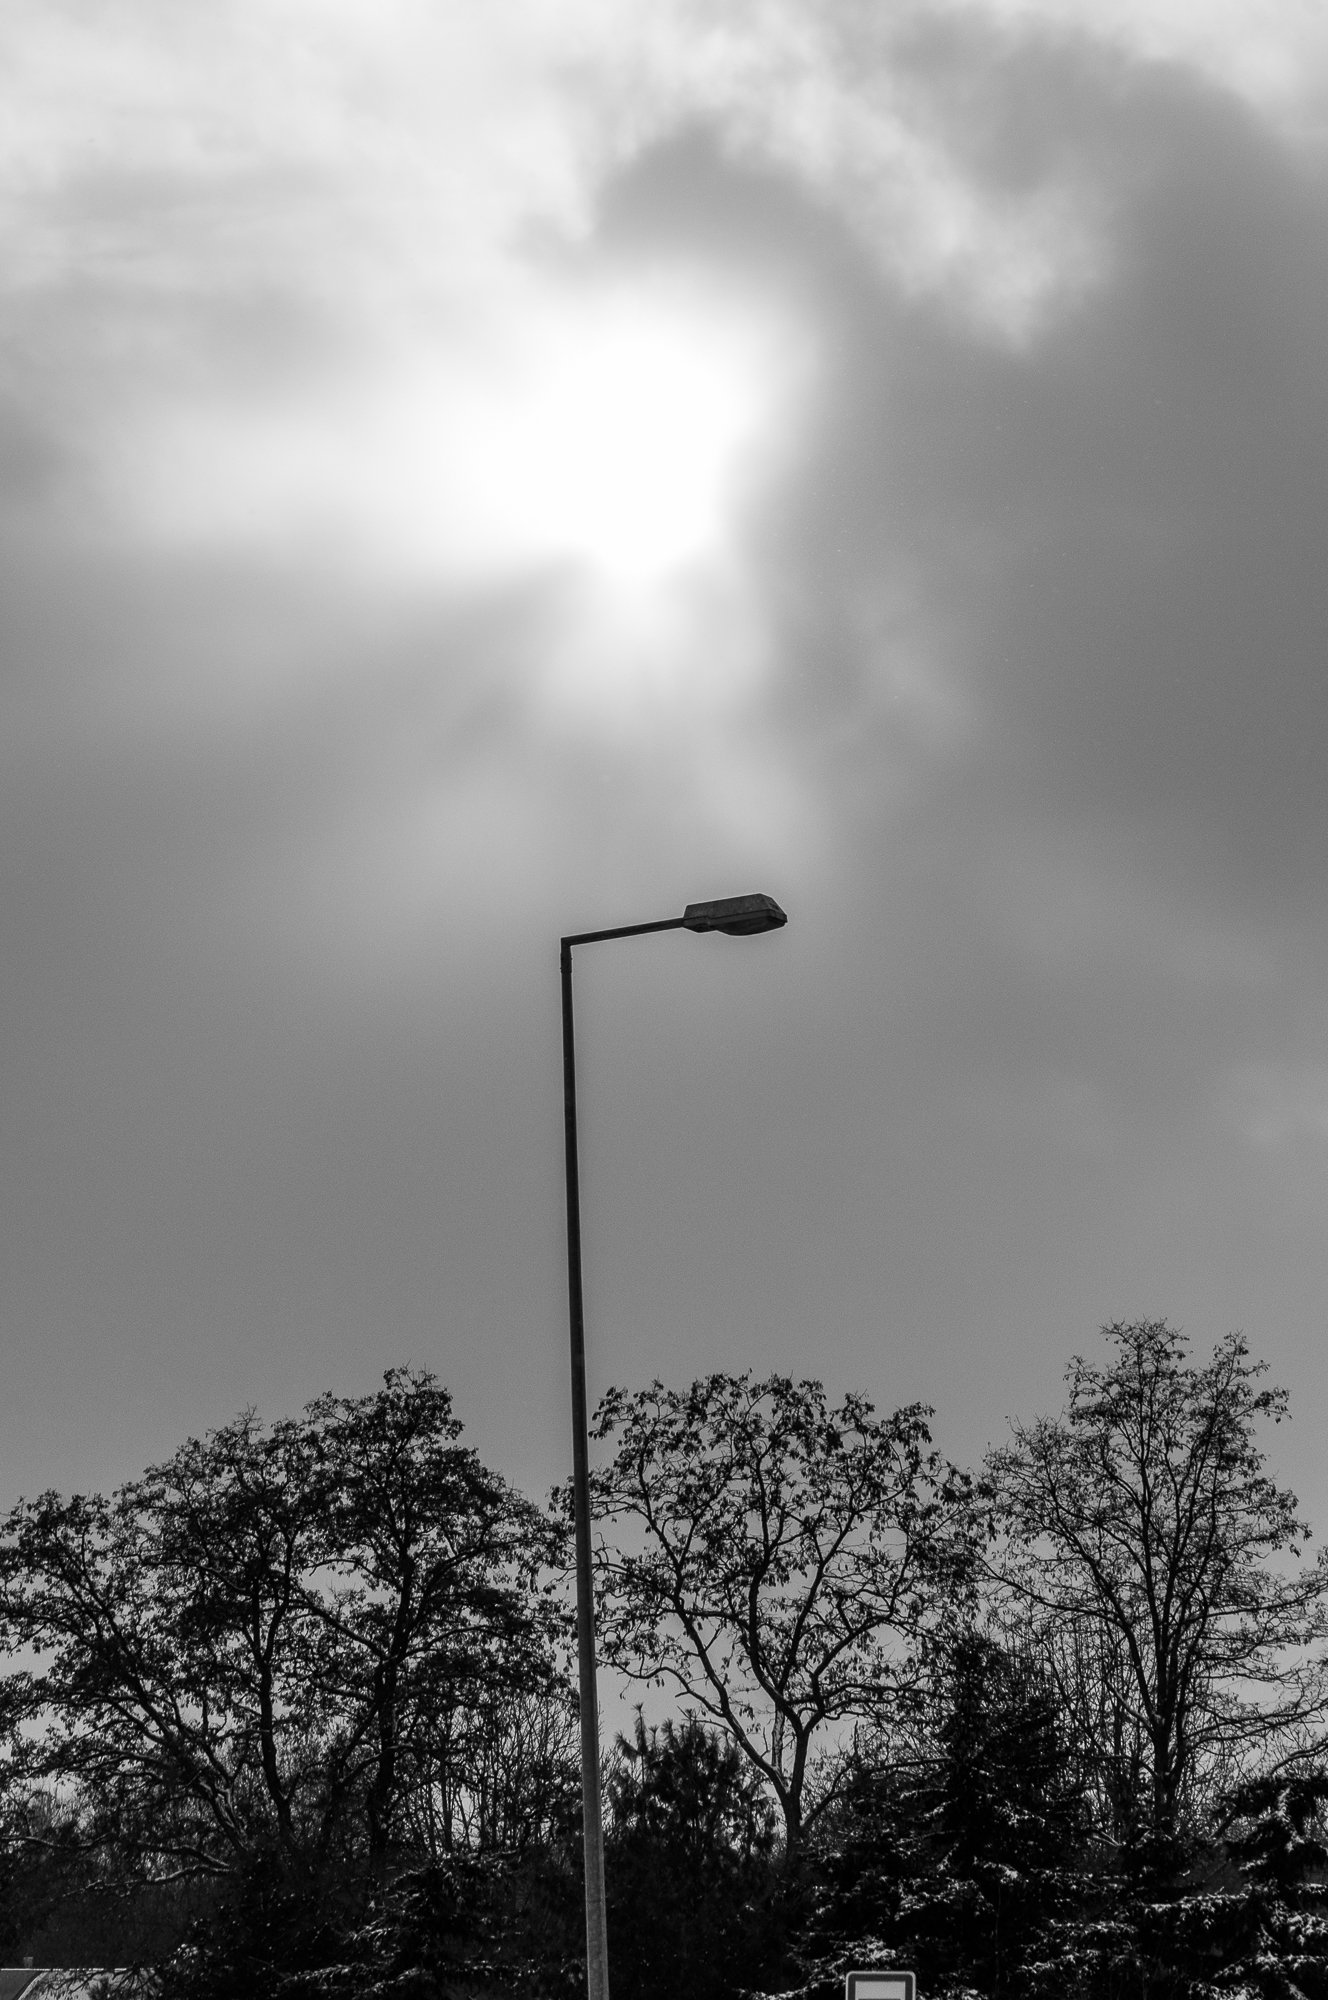 Adam Mazek Photography Krakow 2021. Post: "Less is more." Minimalism. Street lamp and sun.